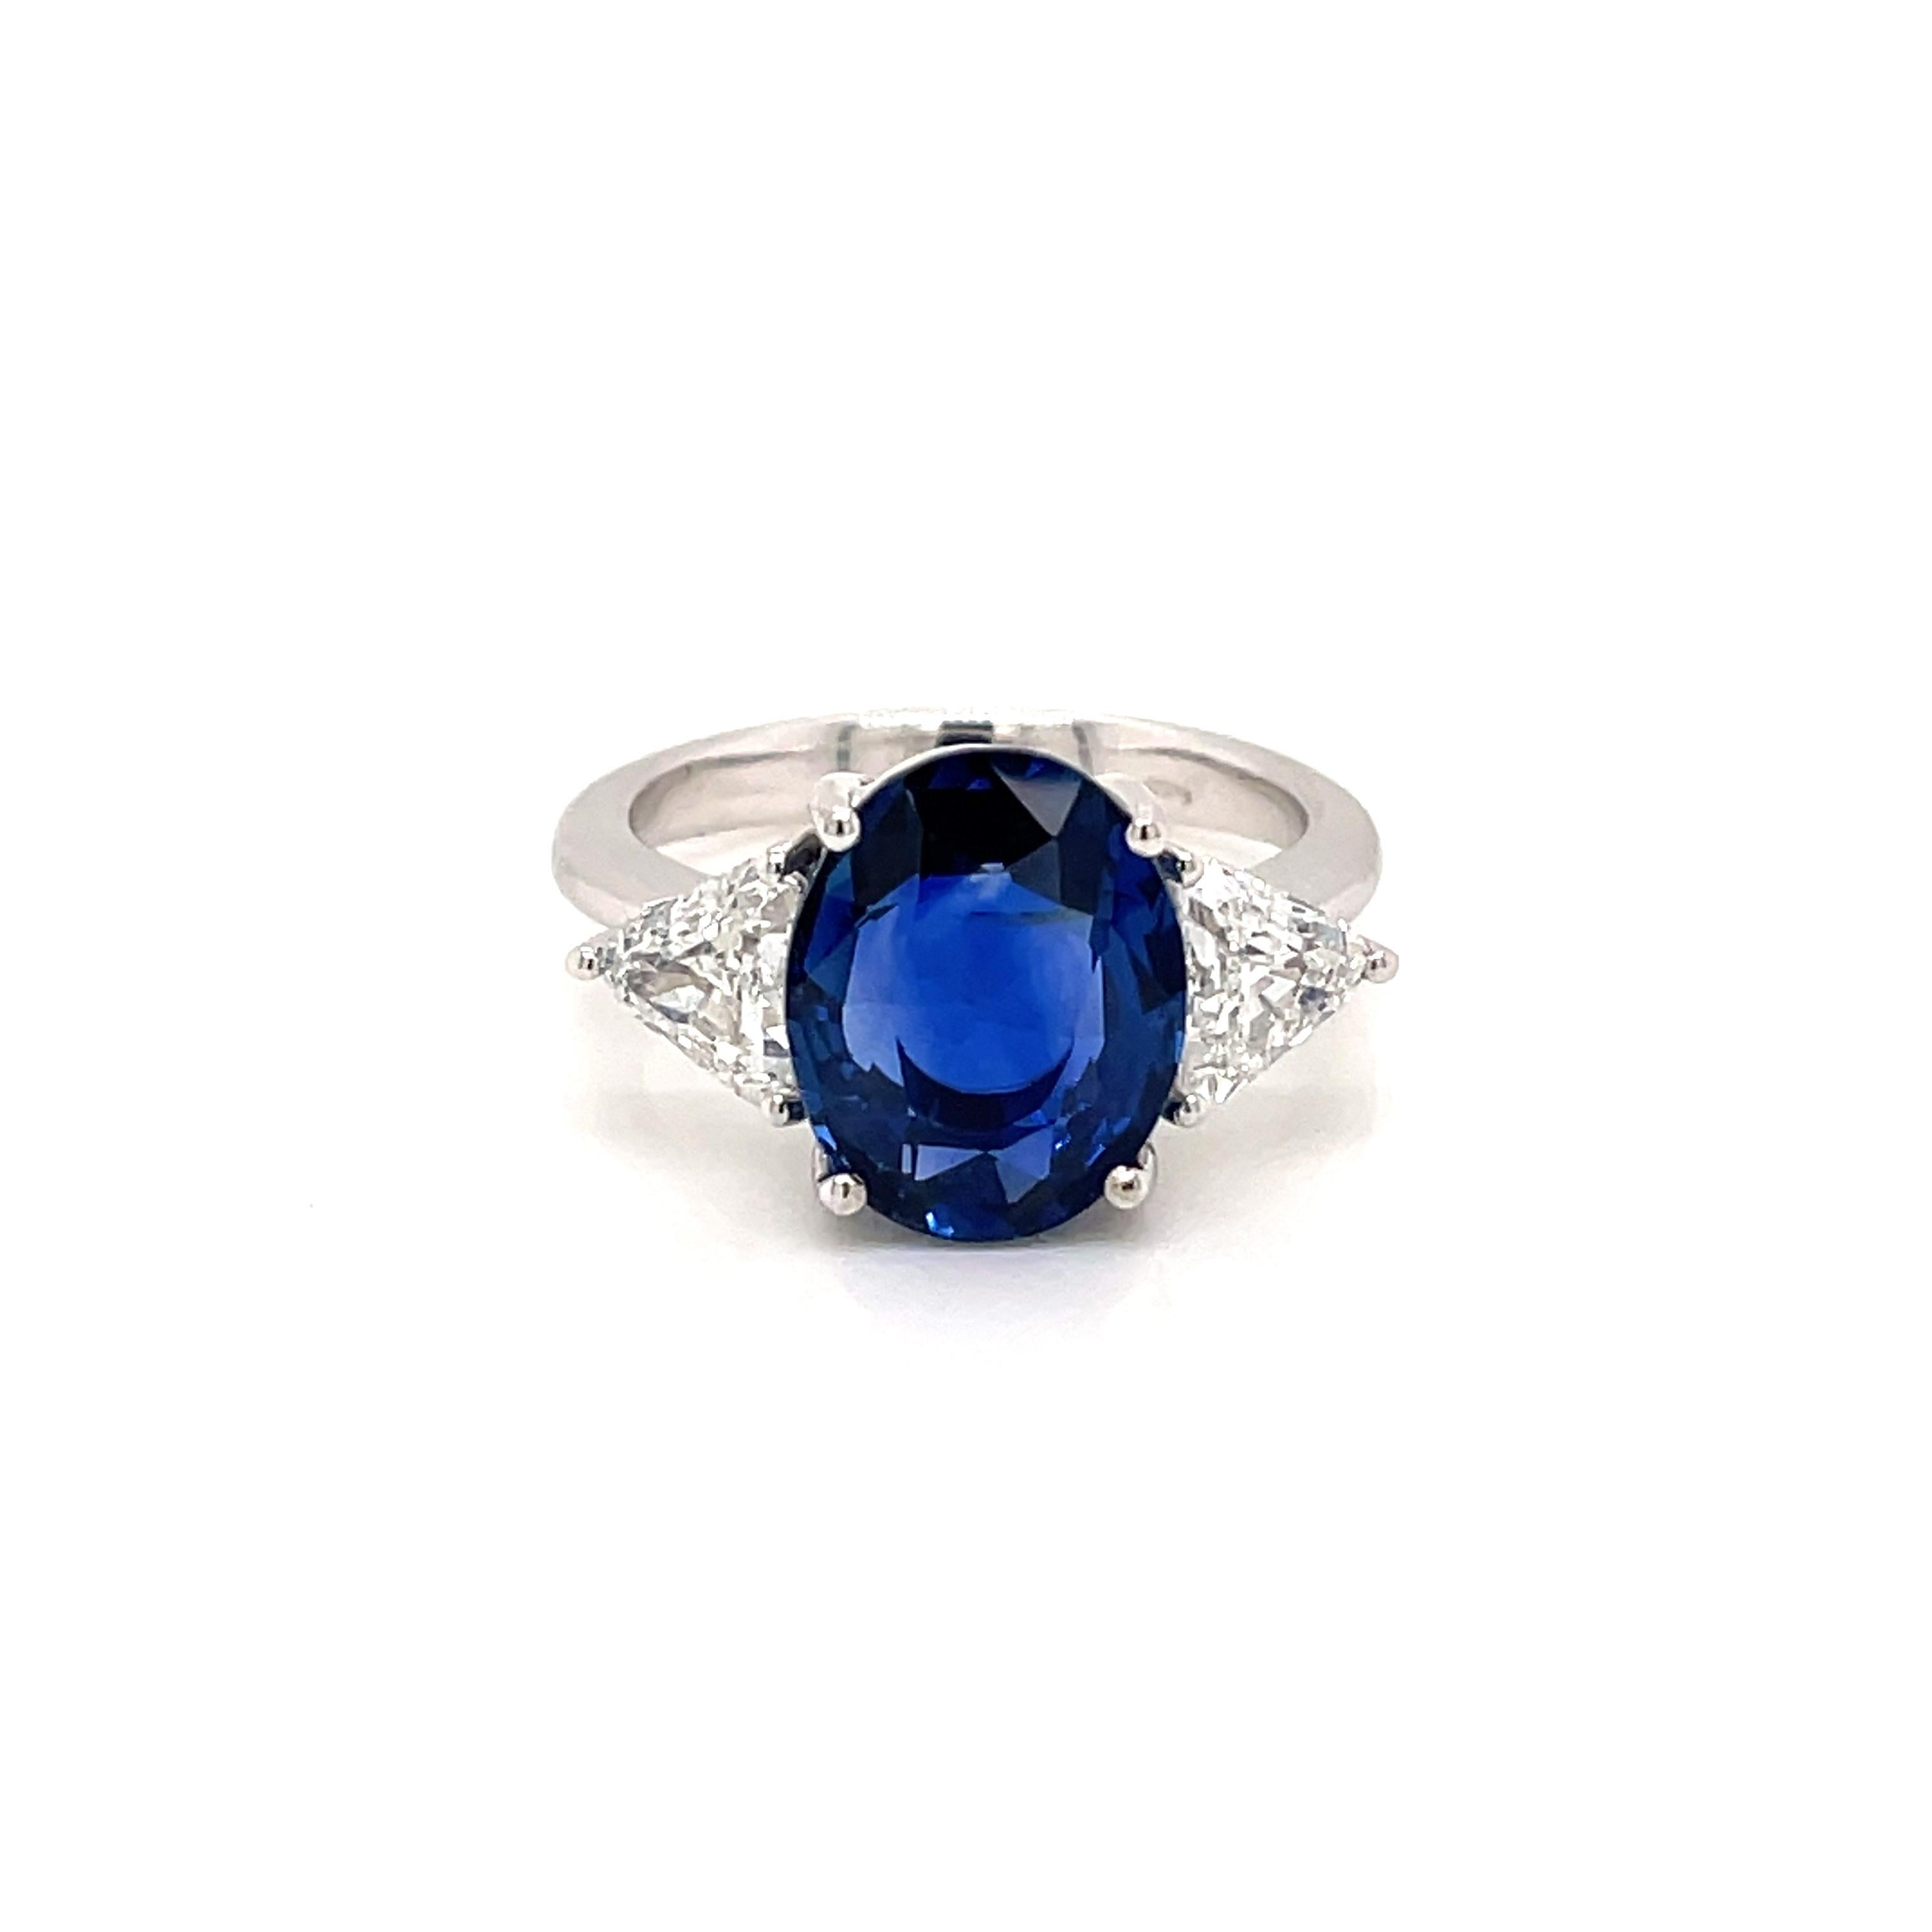 Oval Cut Vintage Certified 6 Carat Unheated Burma Sapphire Diamond Engagement Ring